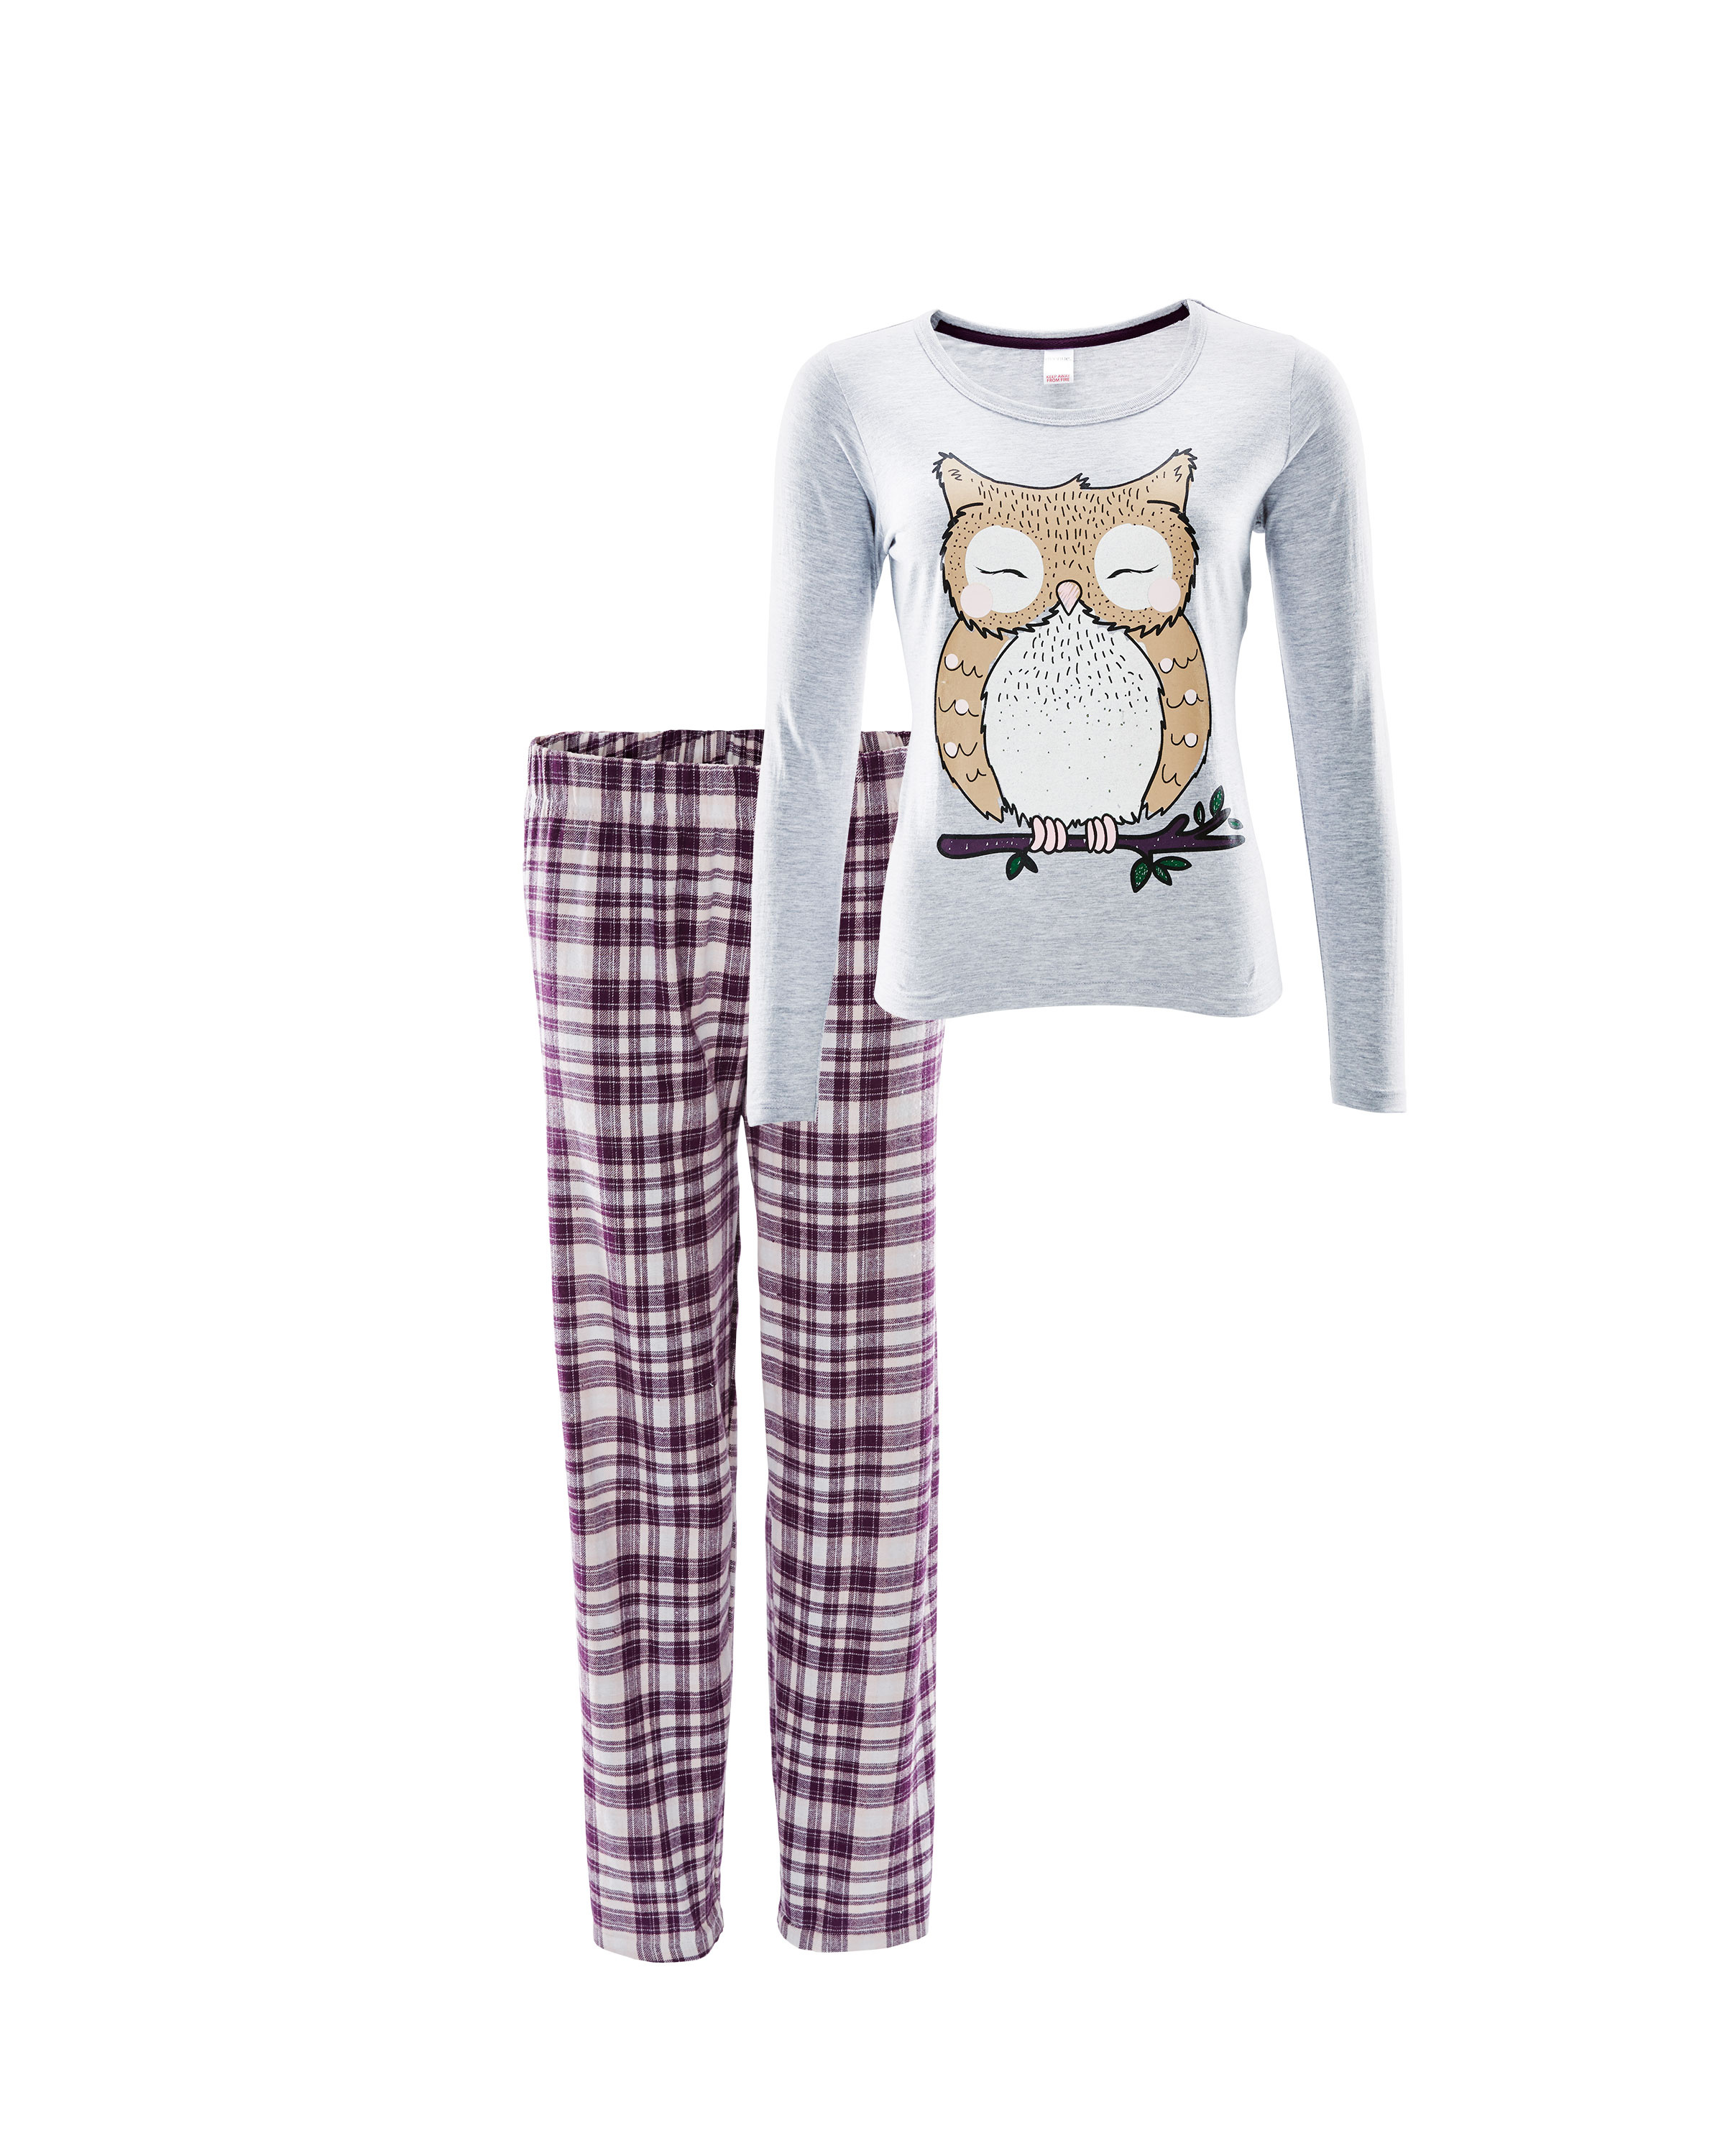 Avenue Owl Ladies Winter Pyjamas - ALDI UK